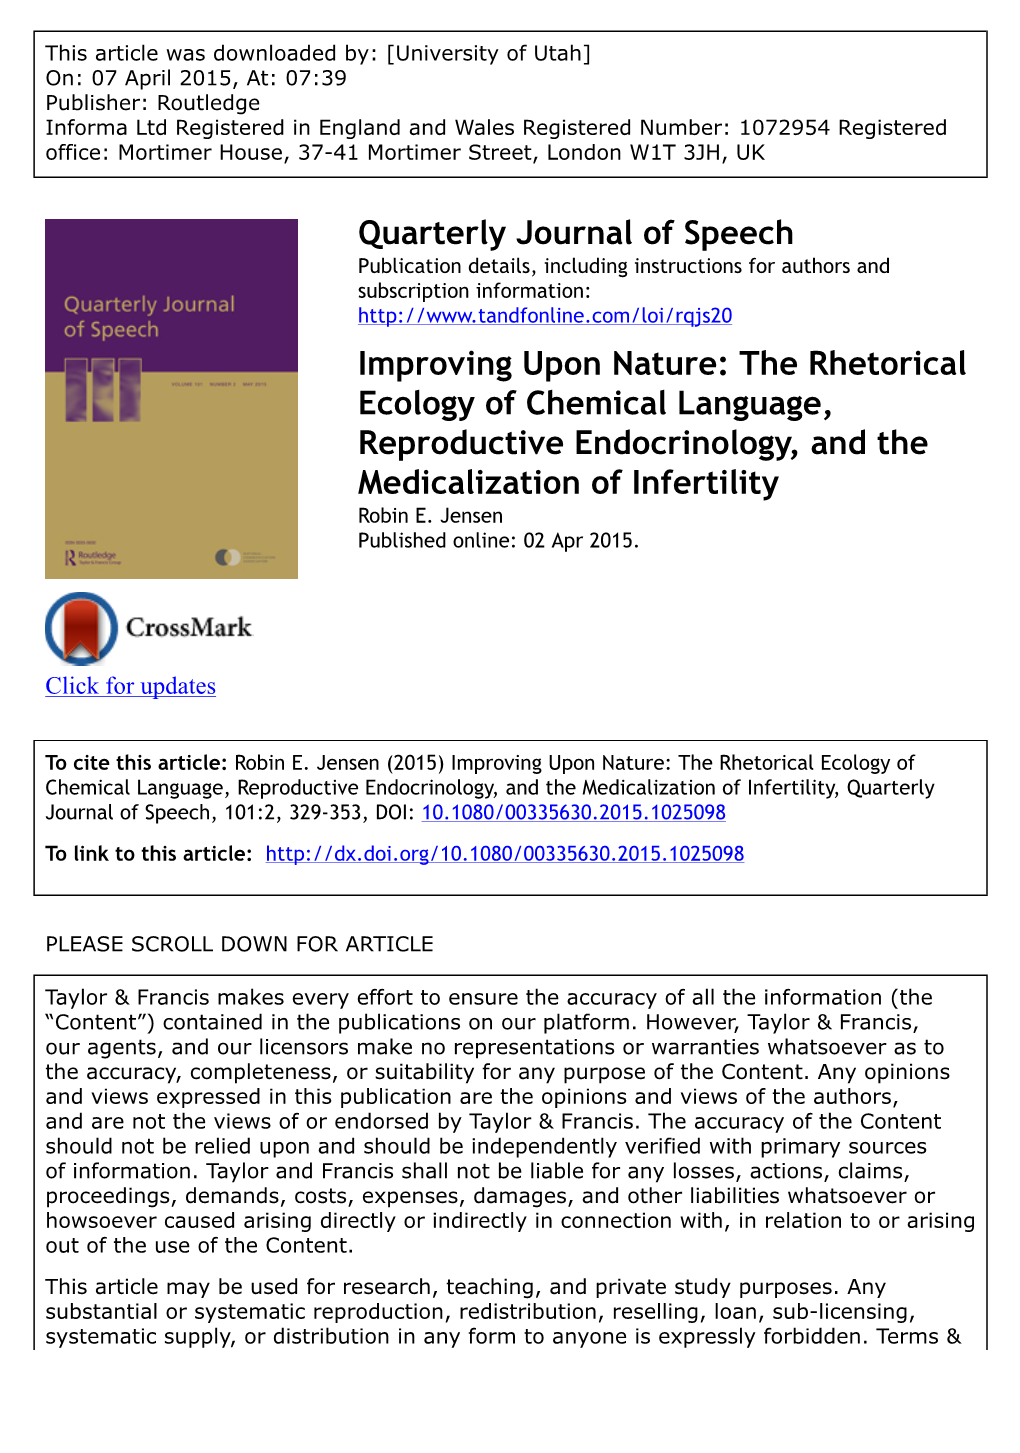 Improving Upon Nature: the Rhetorical Ecology of Chemical Language, Reproductive Endocrinology, and the Medicalization of Infertility Robin E